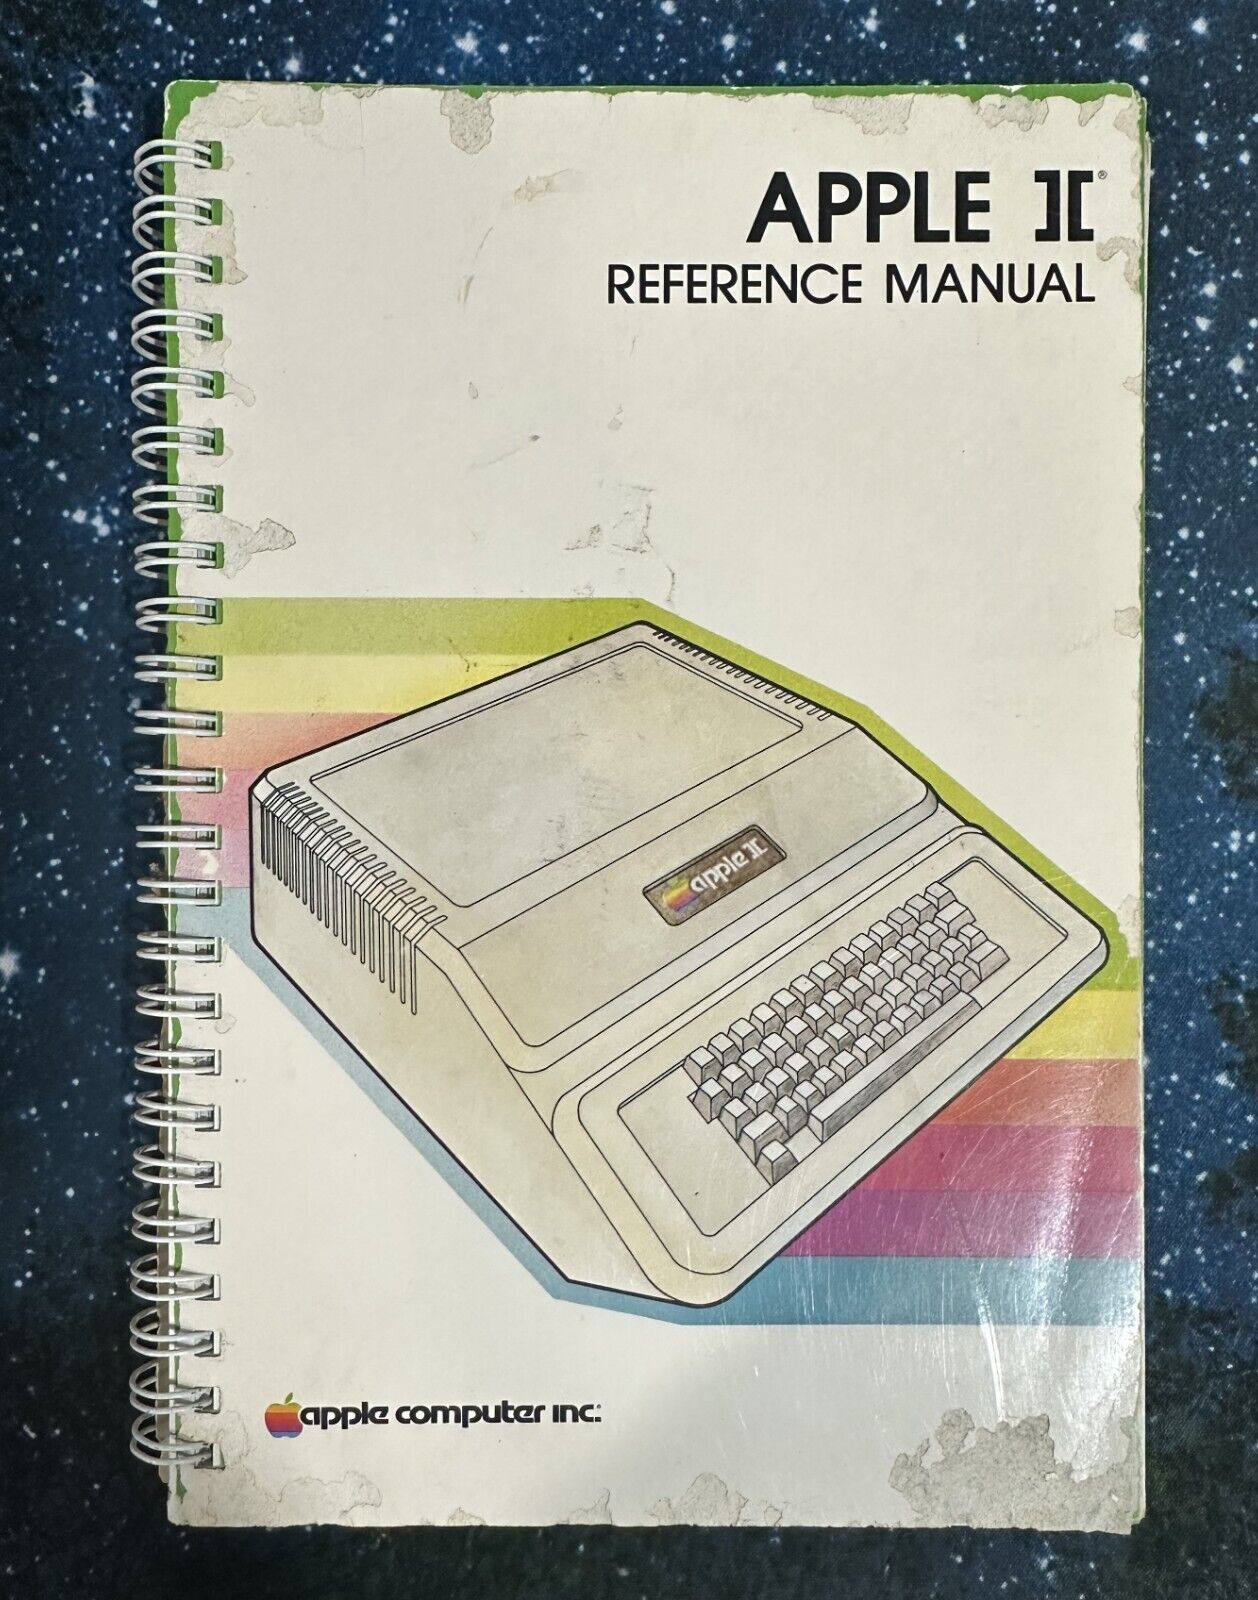 Apple II Reference Manual 1979 030-0004-01